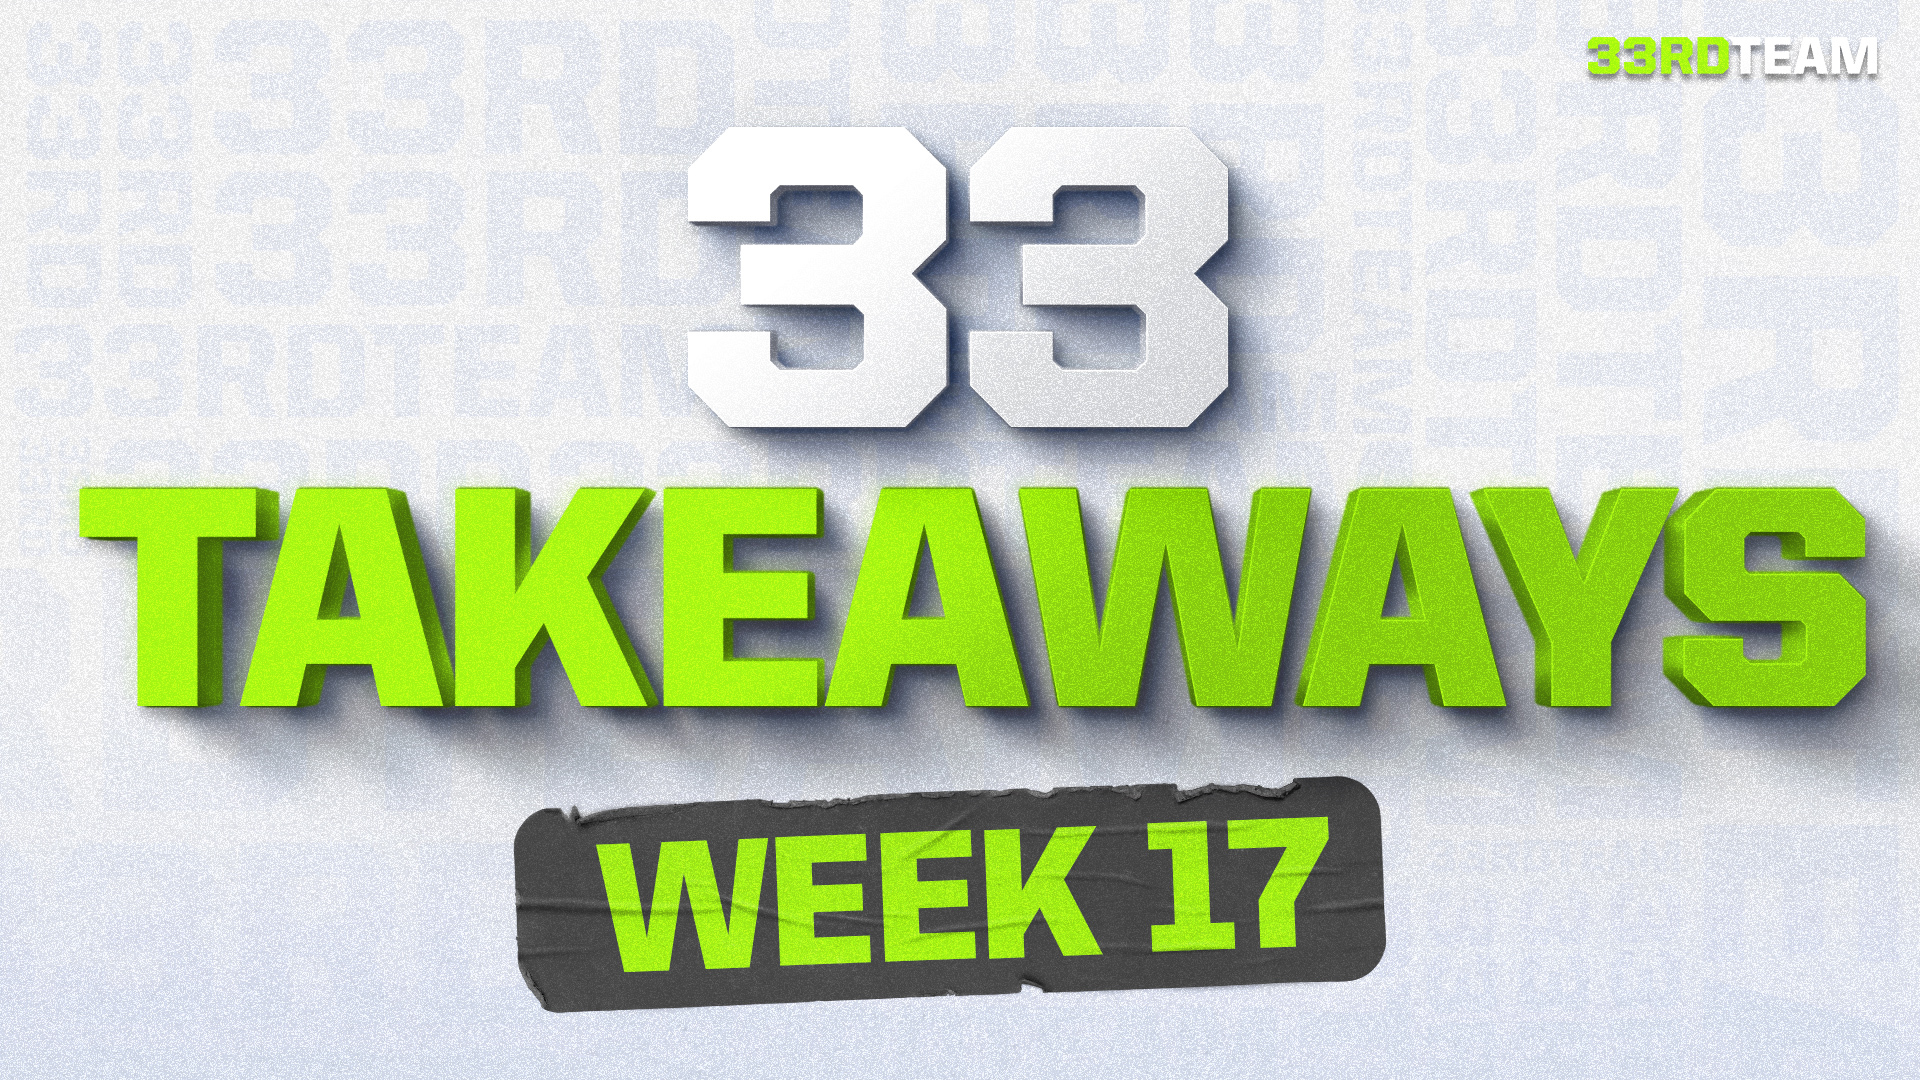 What We Learned: 33 Expert Takeaways From Week 17